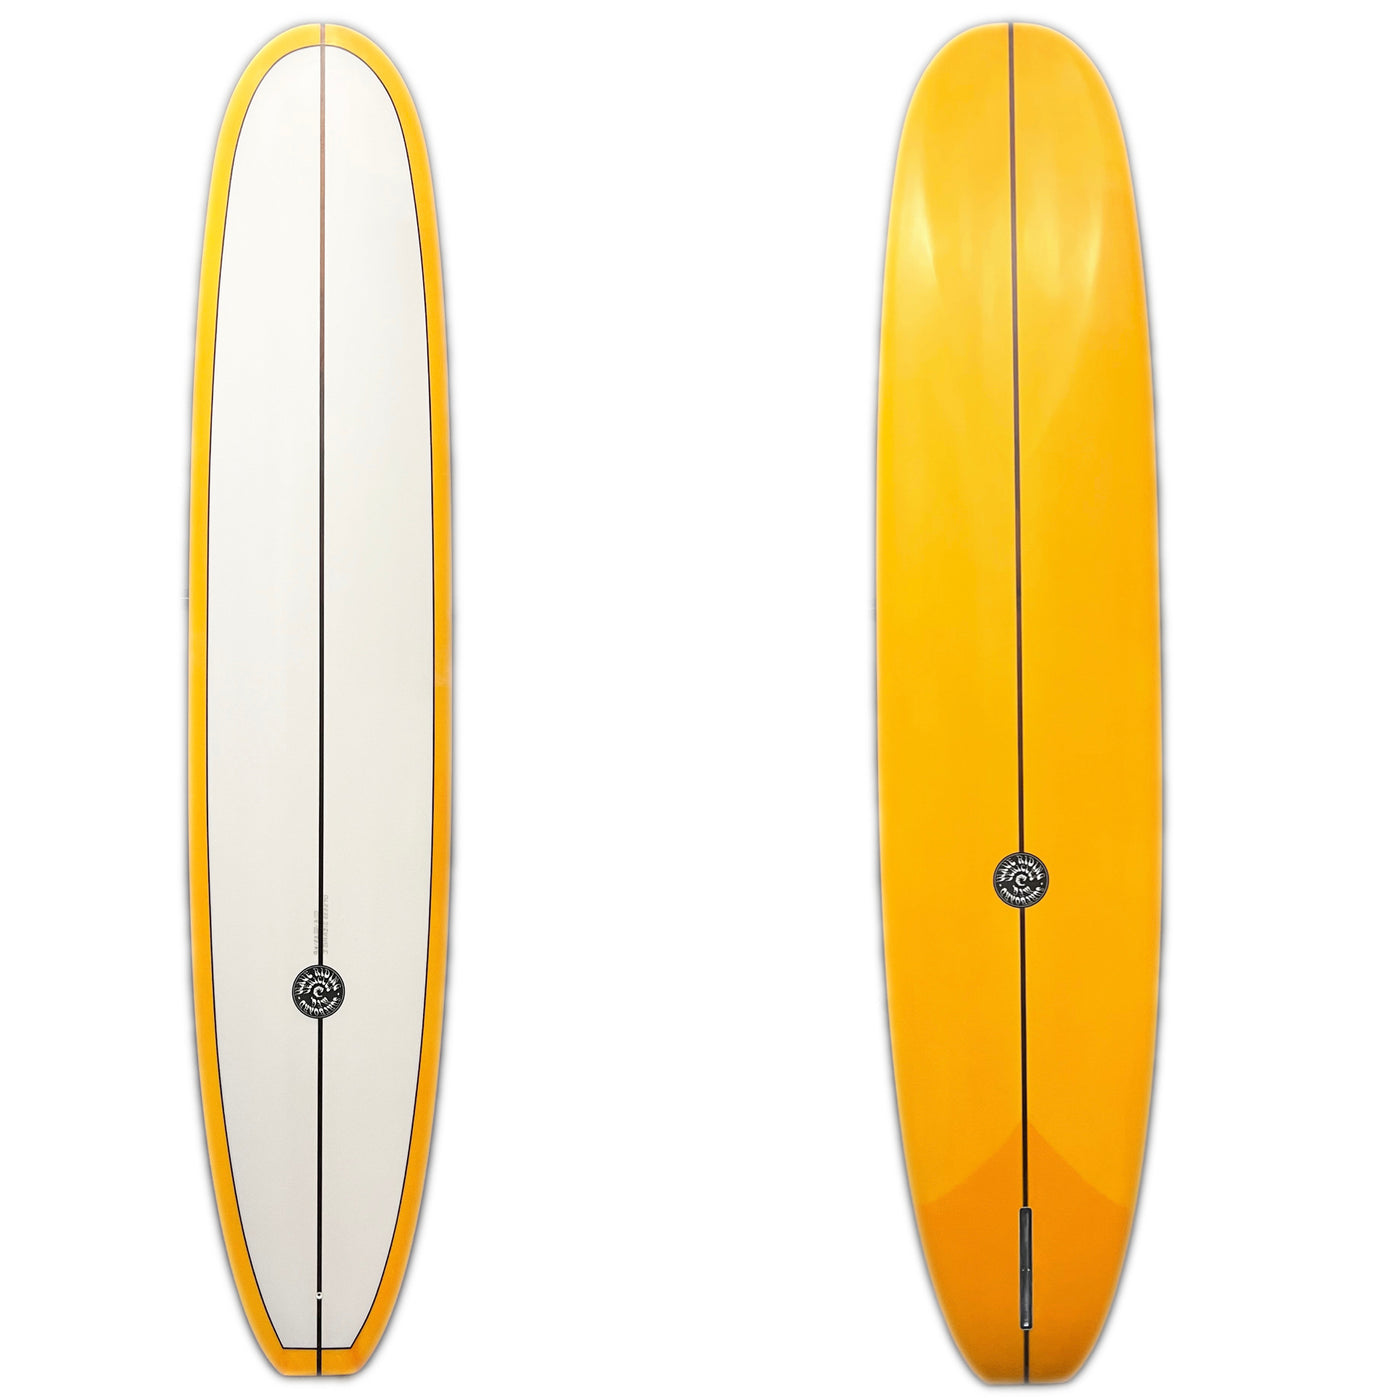 WRV 9'4" Captin's Log Orange Tint Surfboard